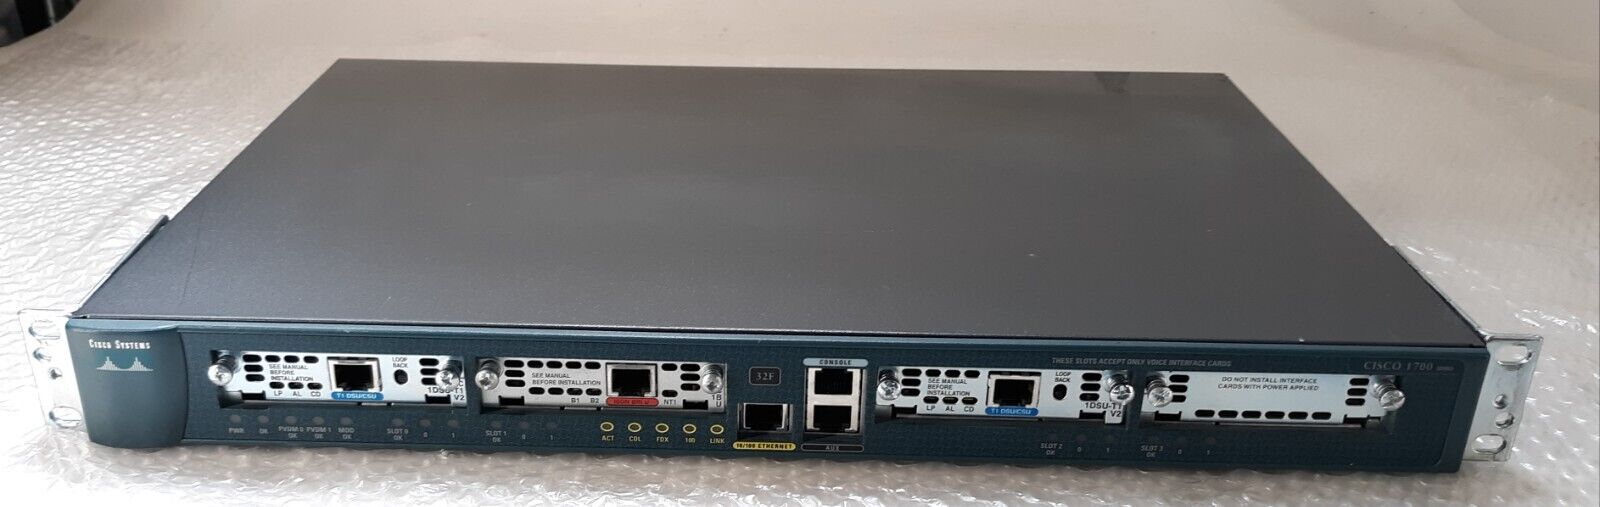 Cisco 1760 Modular Access Router w/ 2x WIC 1DSU-T1 V2 + WIC 1BU Interface Cards